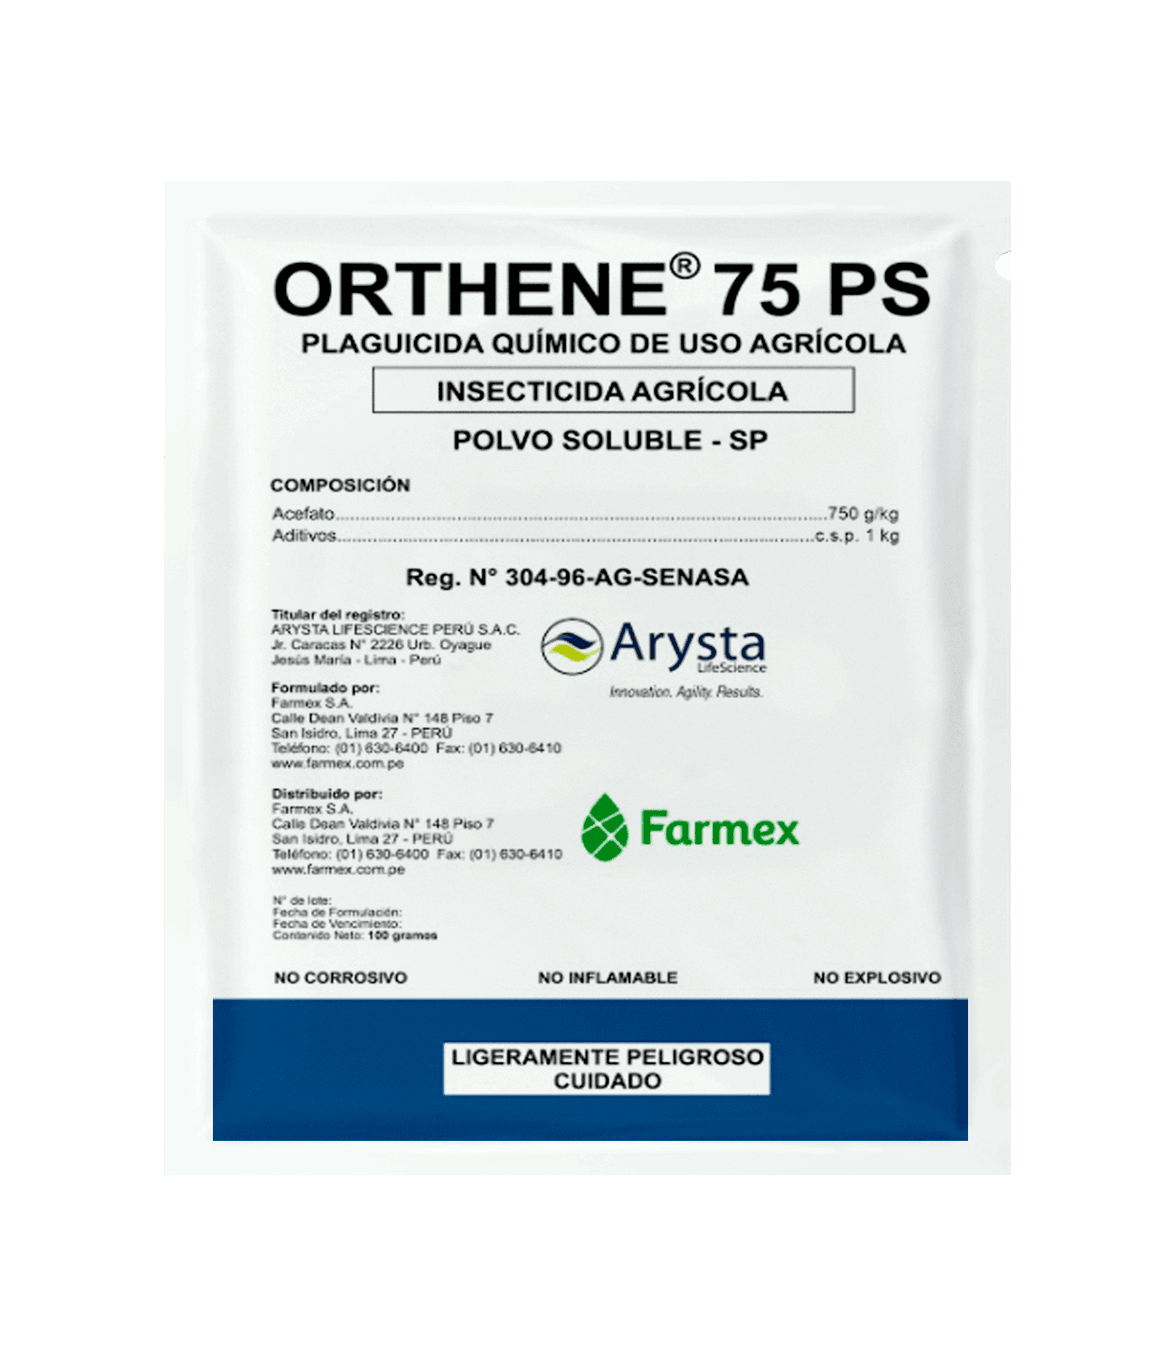 Orthene 75 PS